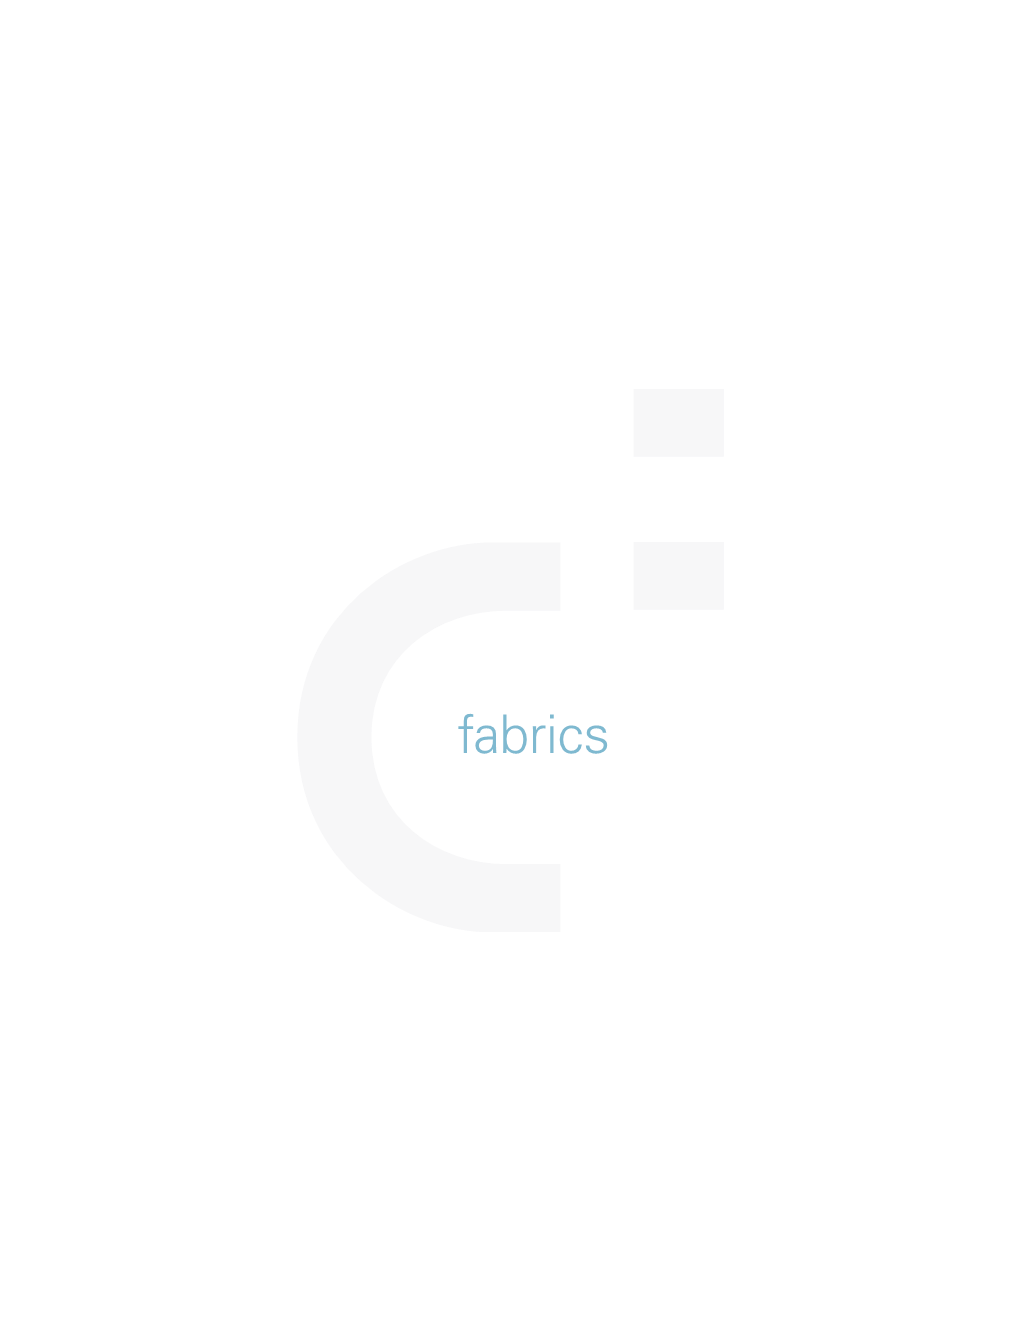 Fabrics Fabric Specifications